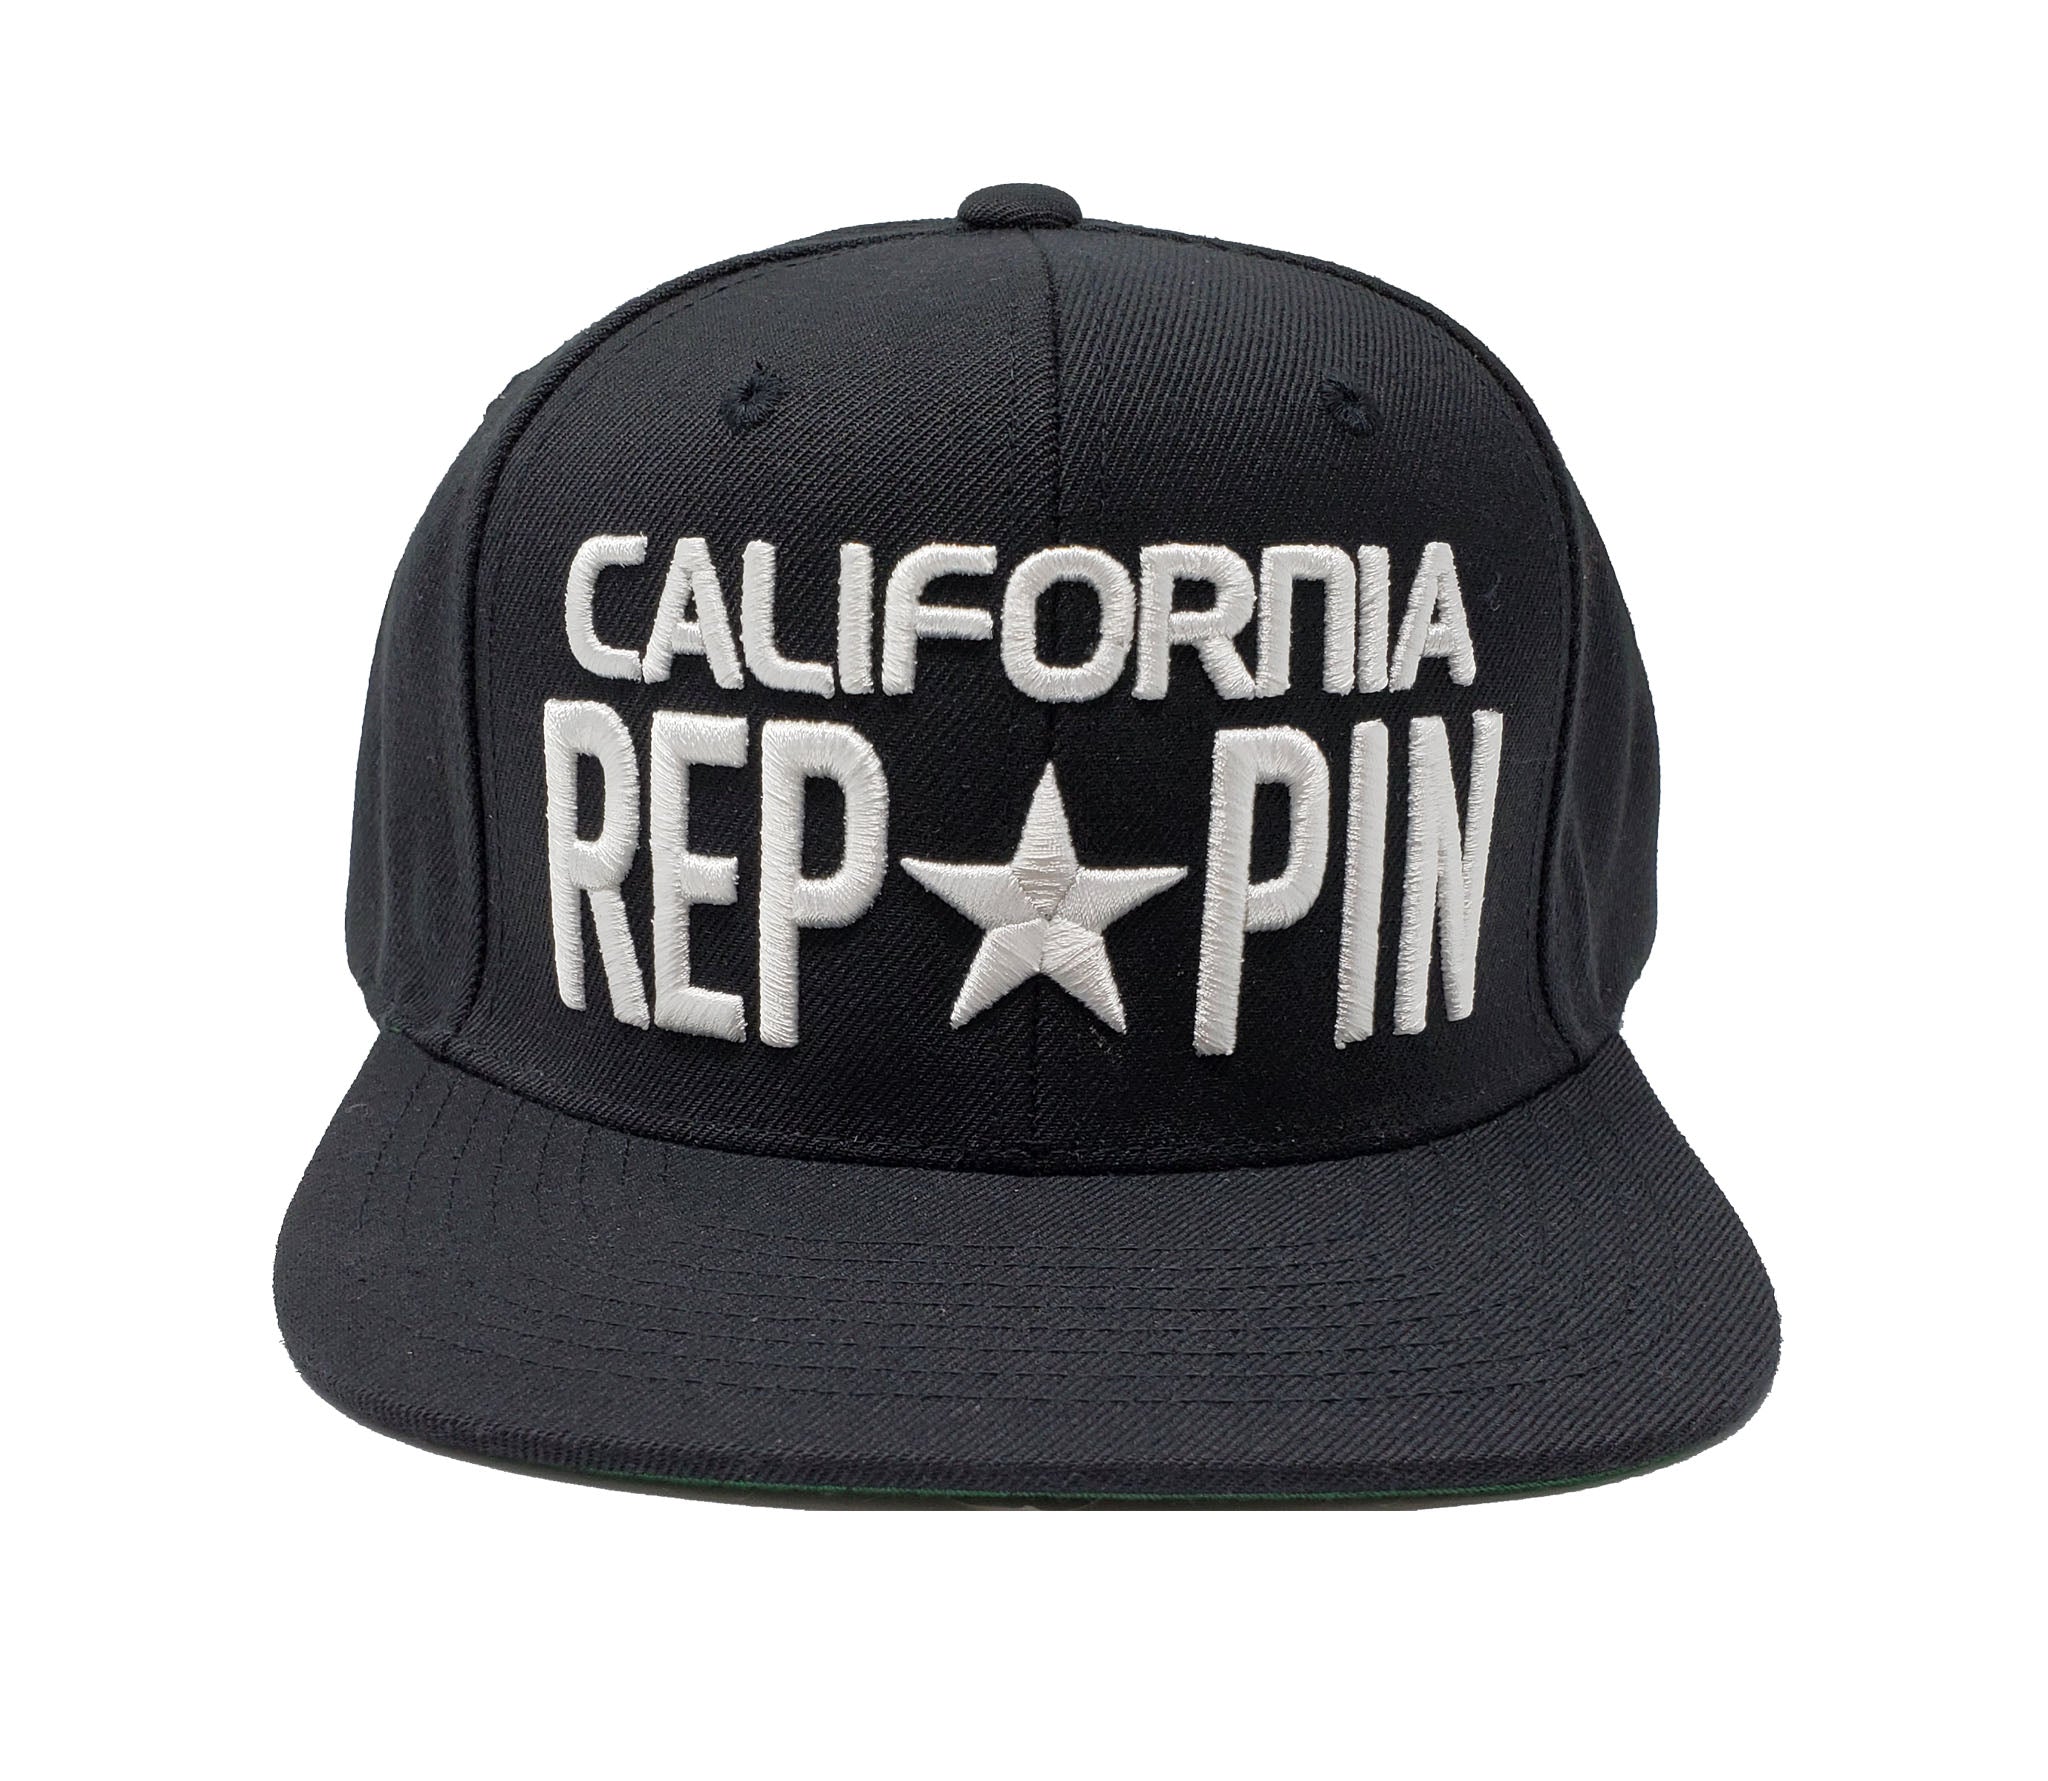 California Reppin Black and White Snapback